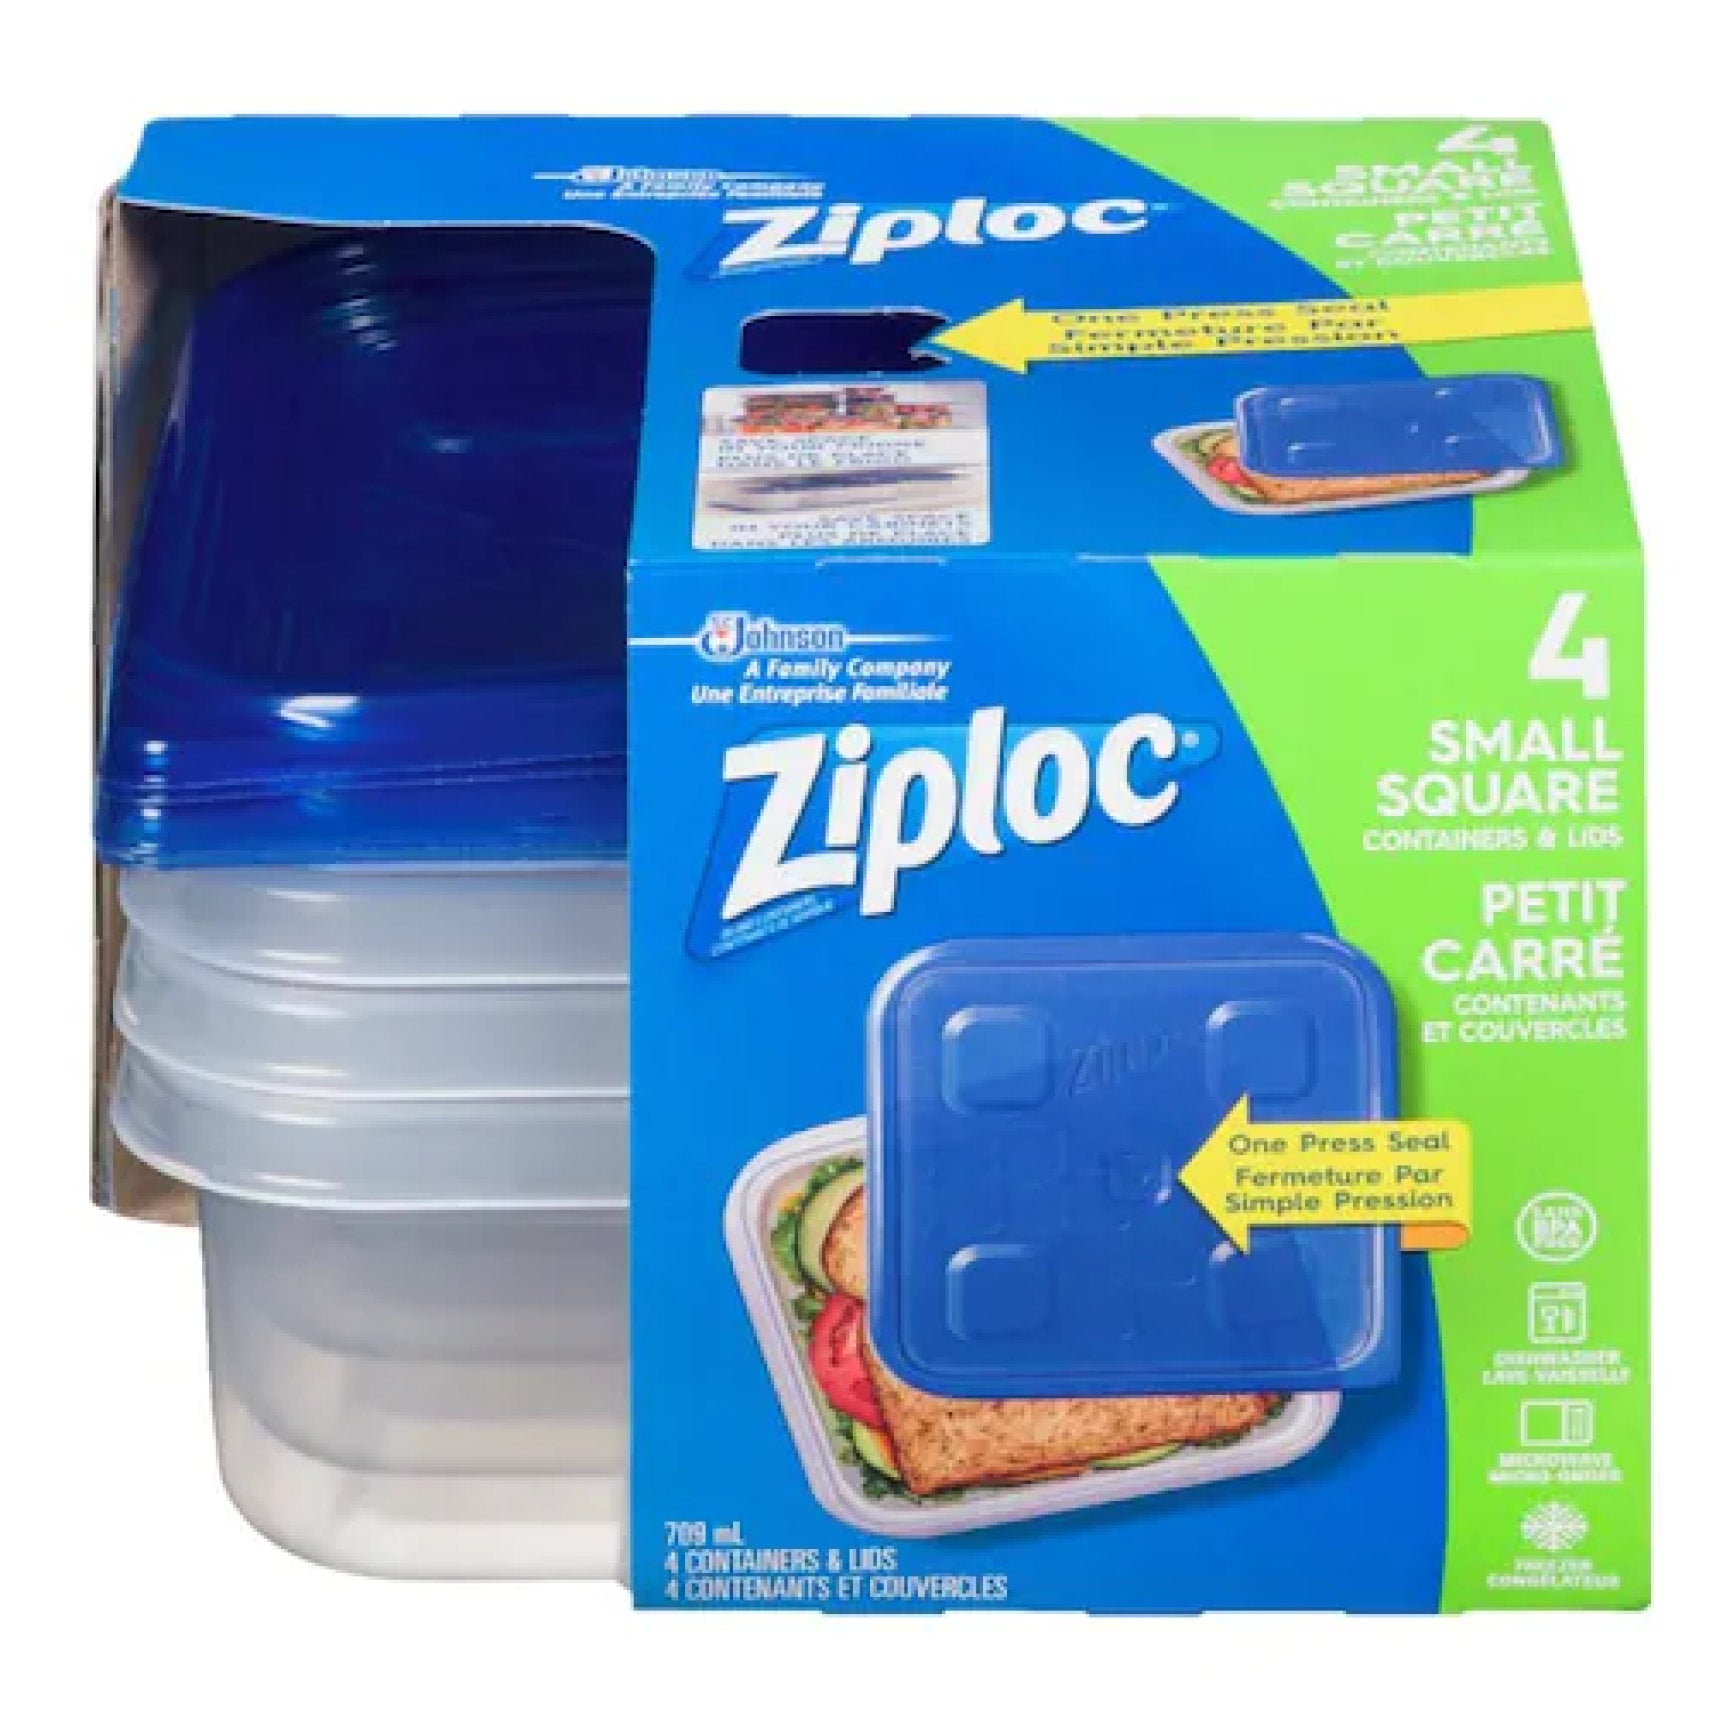 Ziploc Container Small Square, 4 pack